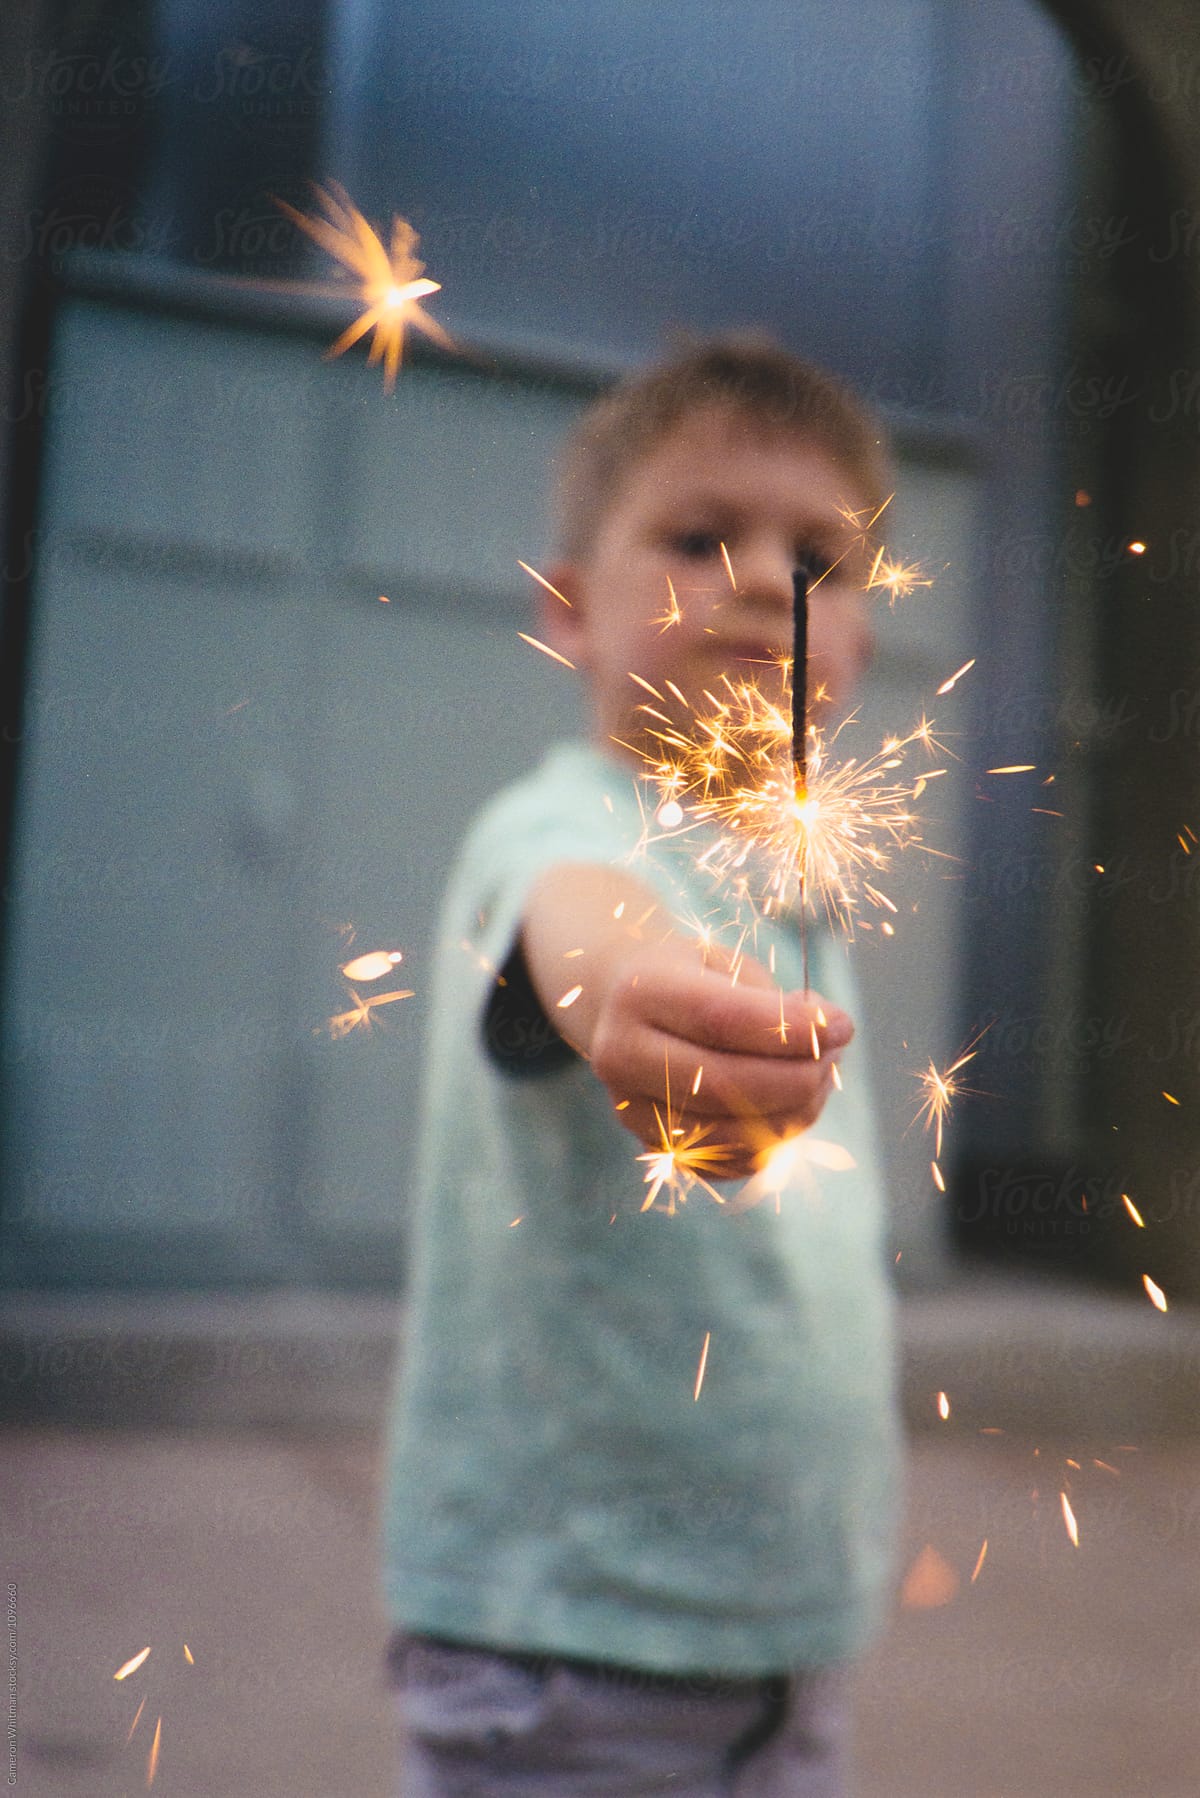 Young boy holding a sparkler